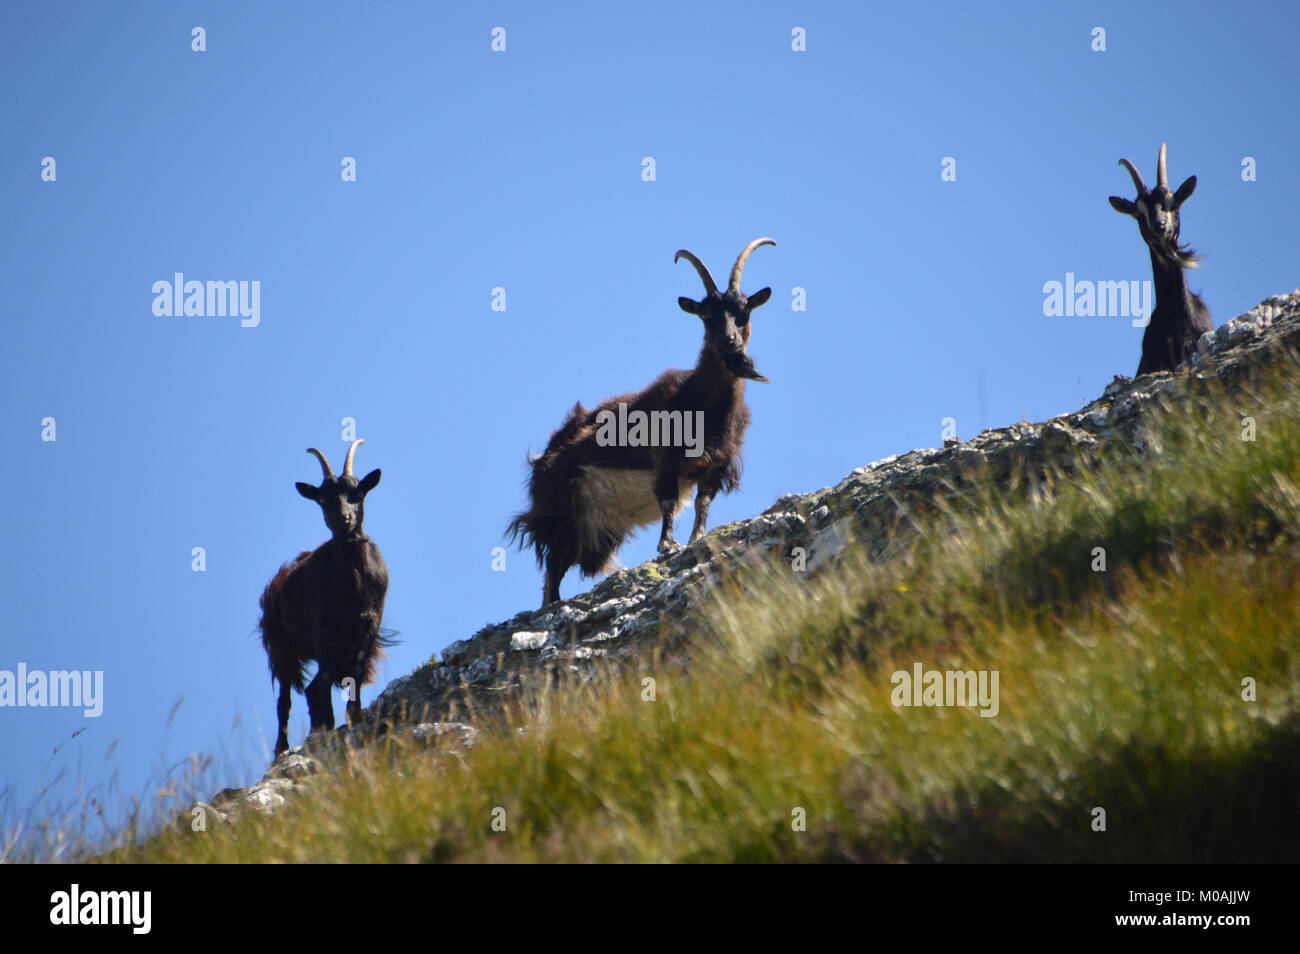 Parte de un rebaño de cabras asilvestradas silvestres curiosos cerca de la Cumbre de la montaña escocés Beinn Corbett un Choin en las Tierras Altas de Escocia, Reino Unido. Foto de stock